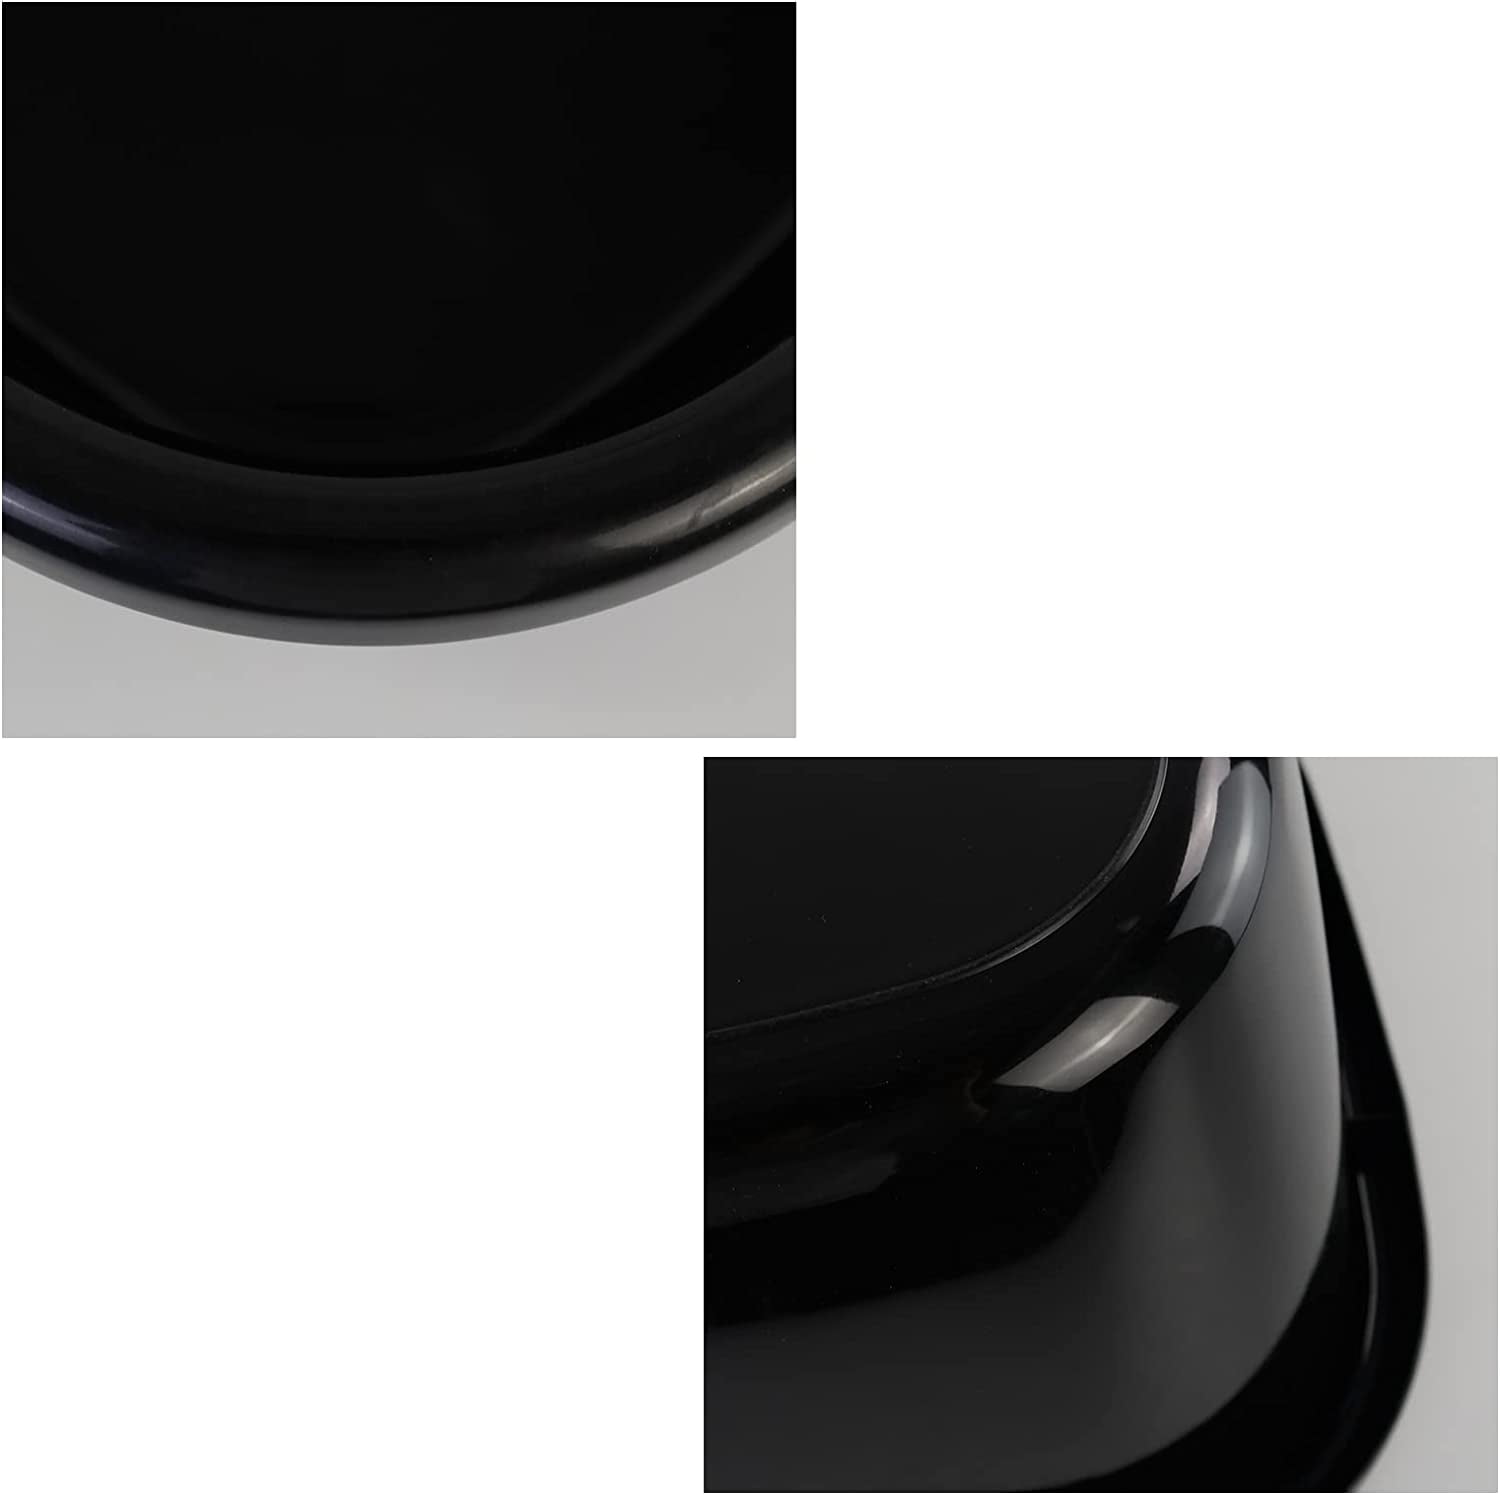 Saedy Black Dish Pan for Washing Dishes,16 Quart, 3 Packs